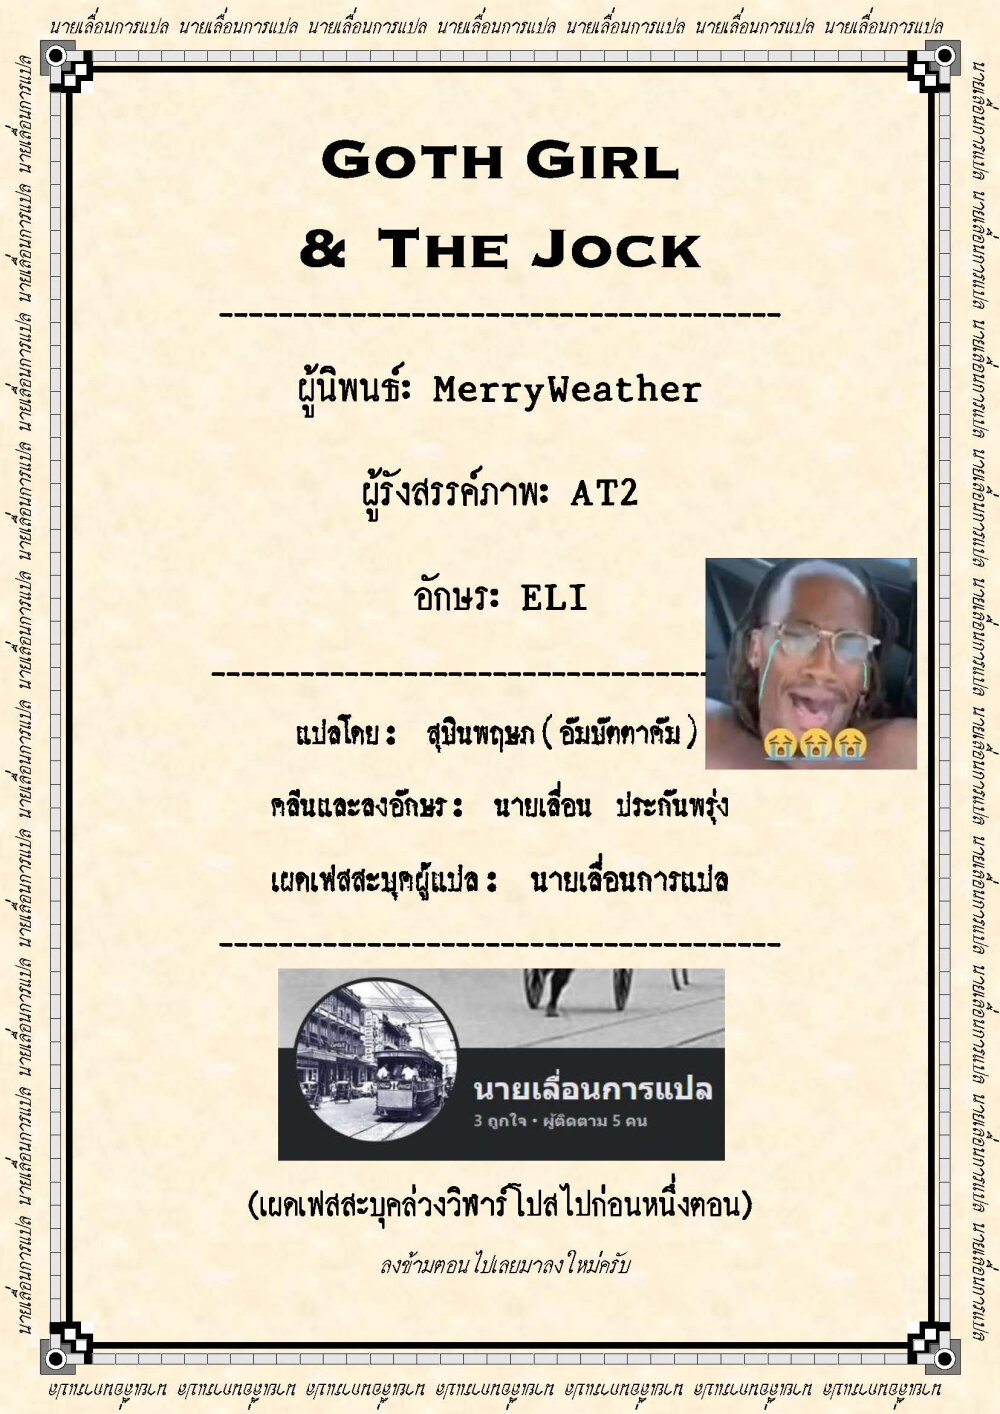 Goth Girl & The Jock 14 8